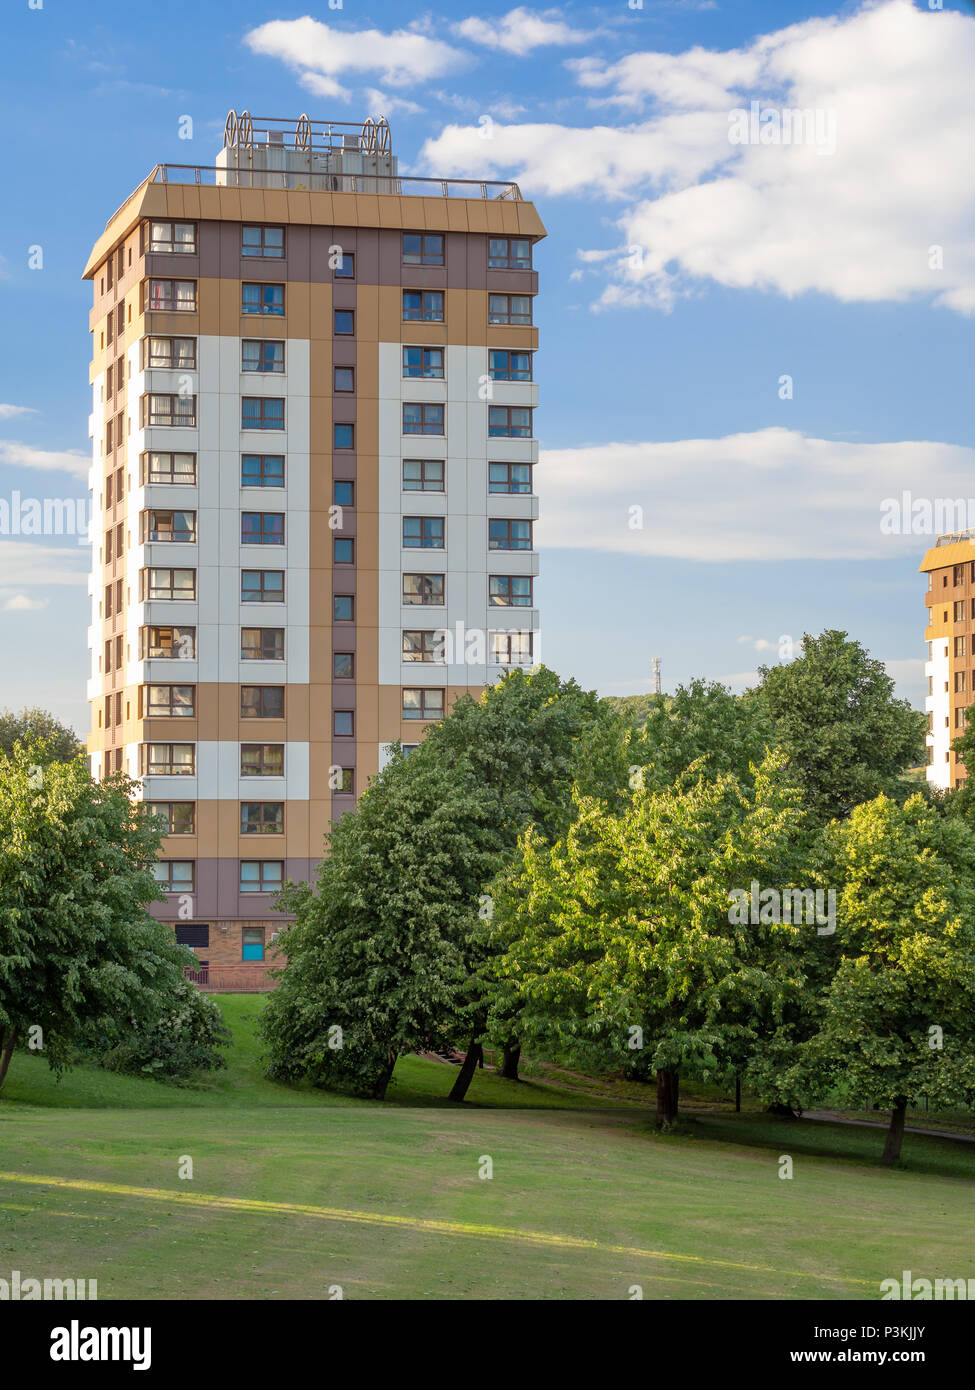 Apartment complex next to a park set against a blue sky Stock Photo